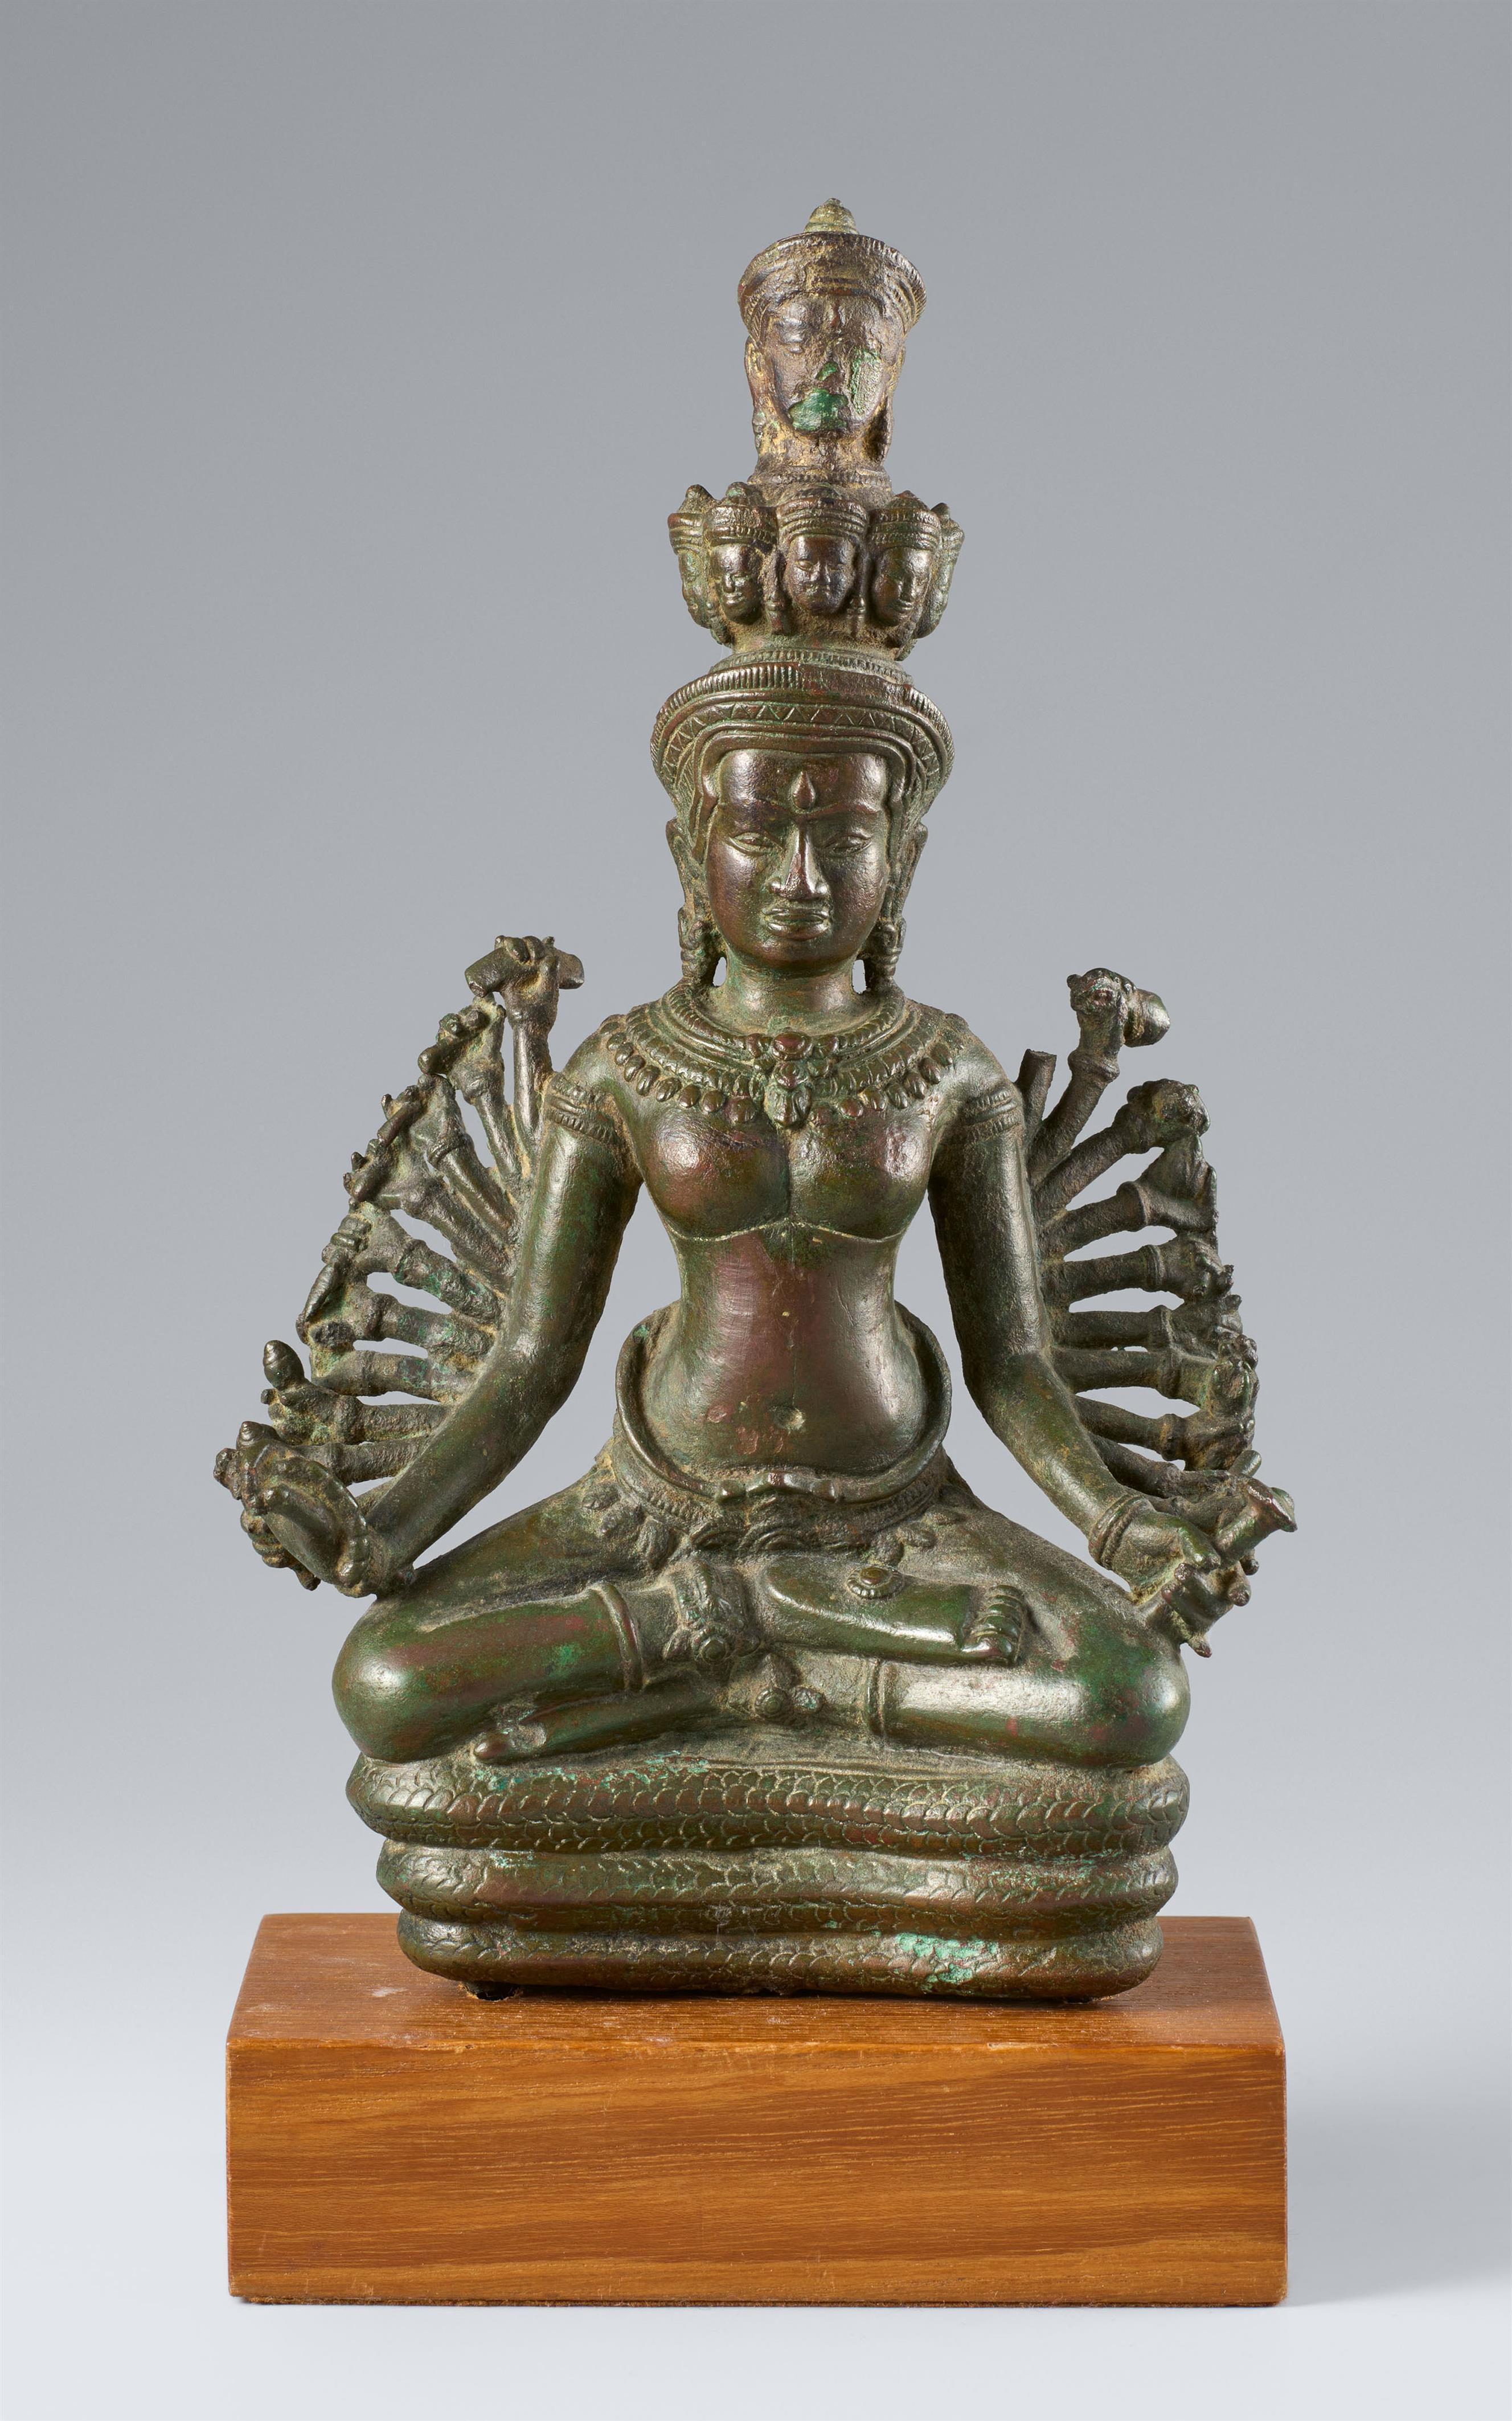 Figur des Prajnaparamita. Bronze. Thailand, vermutlicher Fundort Provinz Nakhom Ratchasima, Amphoe Khong. Lopburi-Stil. 12./13. Jh. - image-1